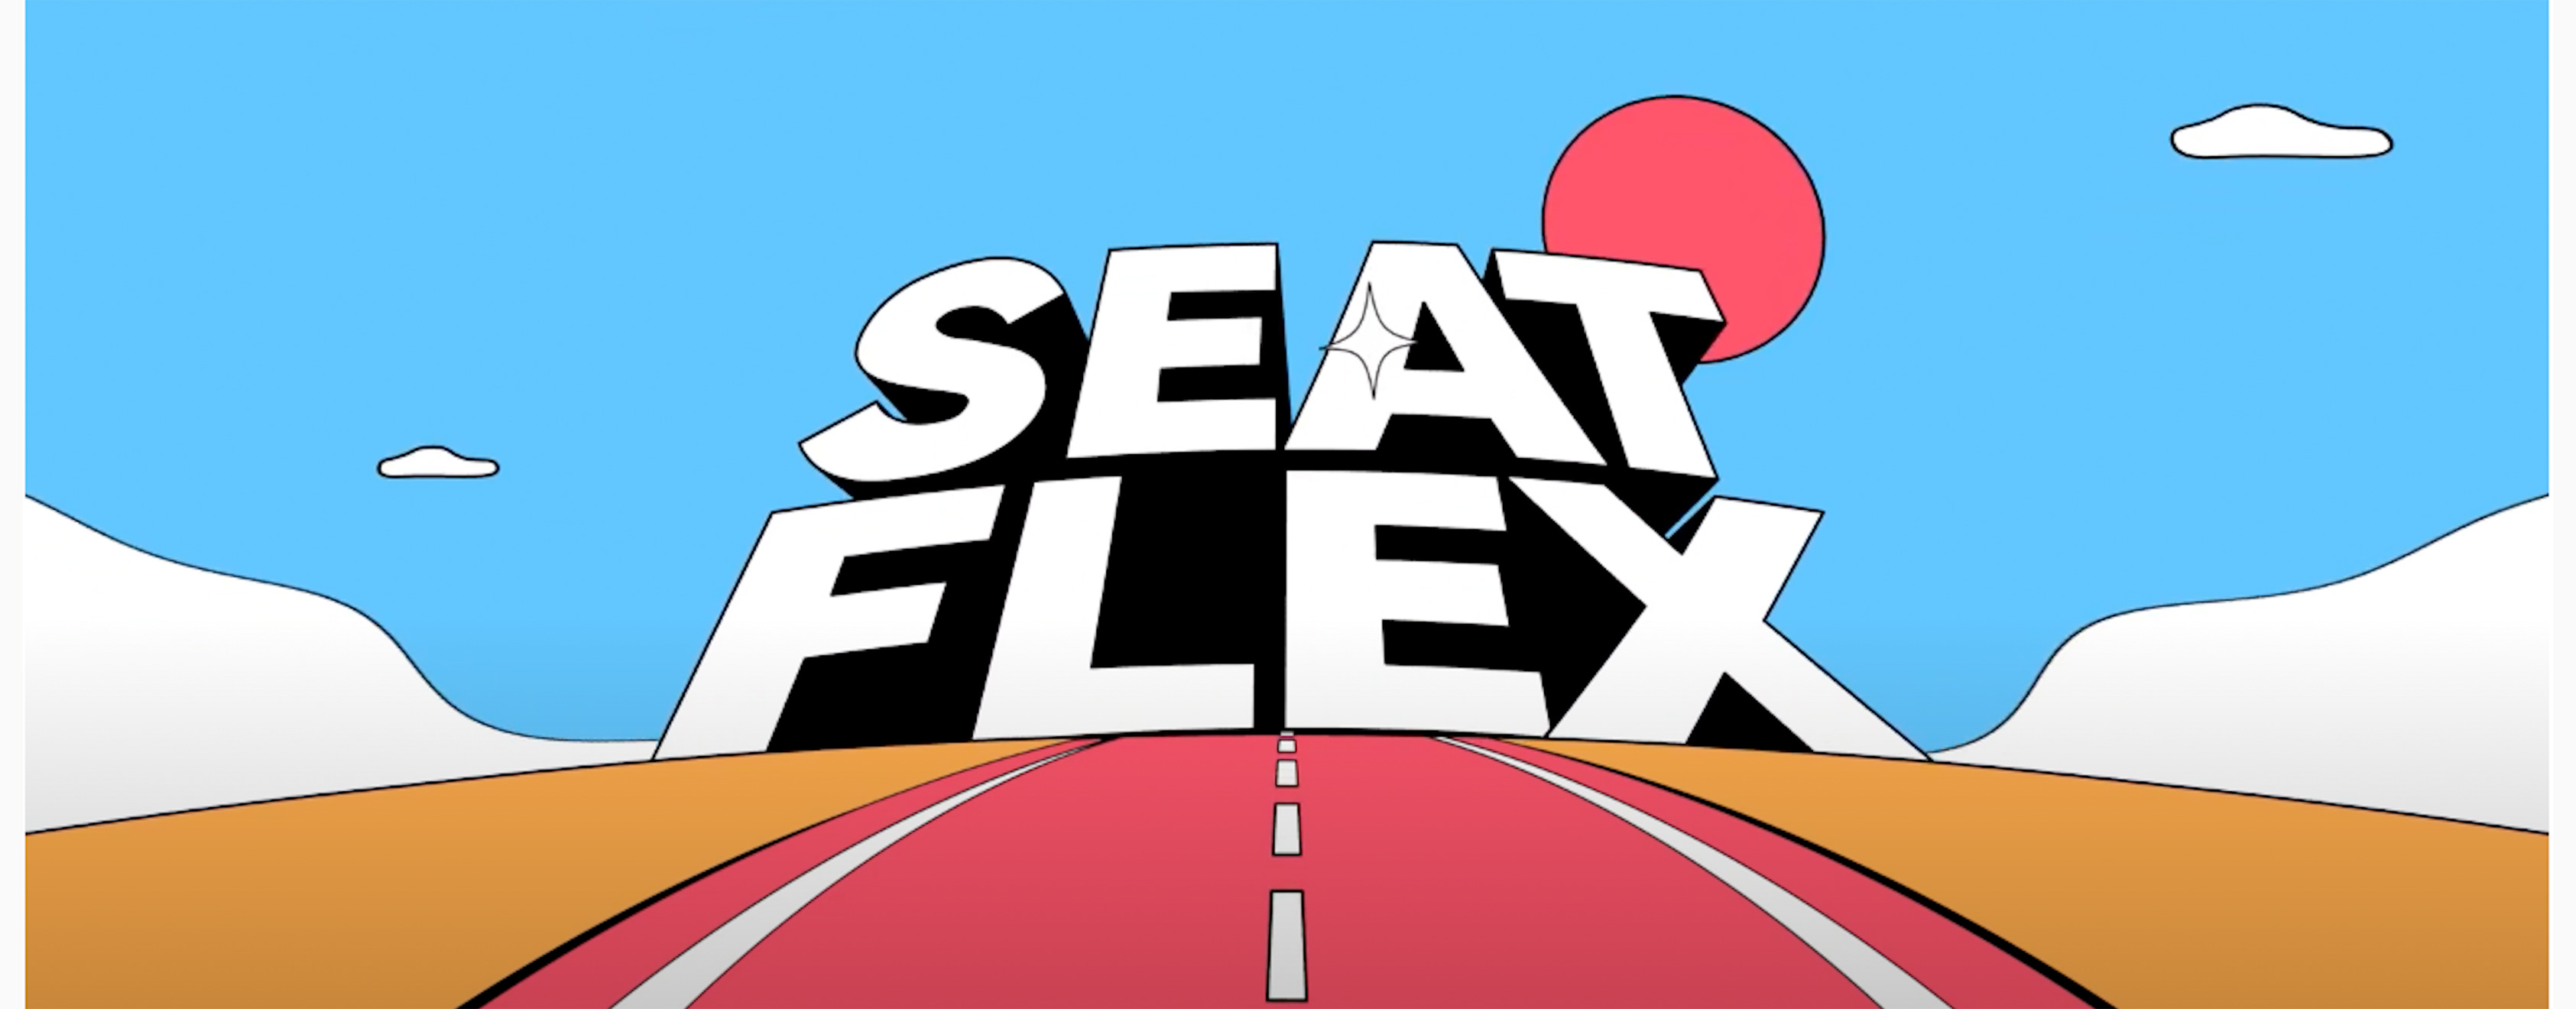 SEAT Flex